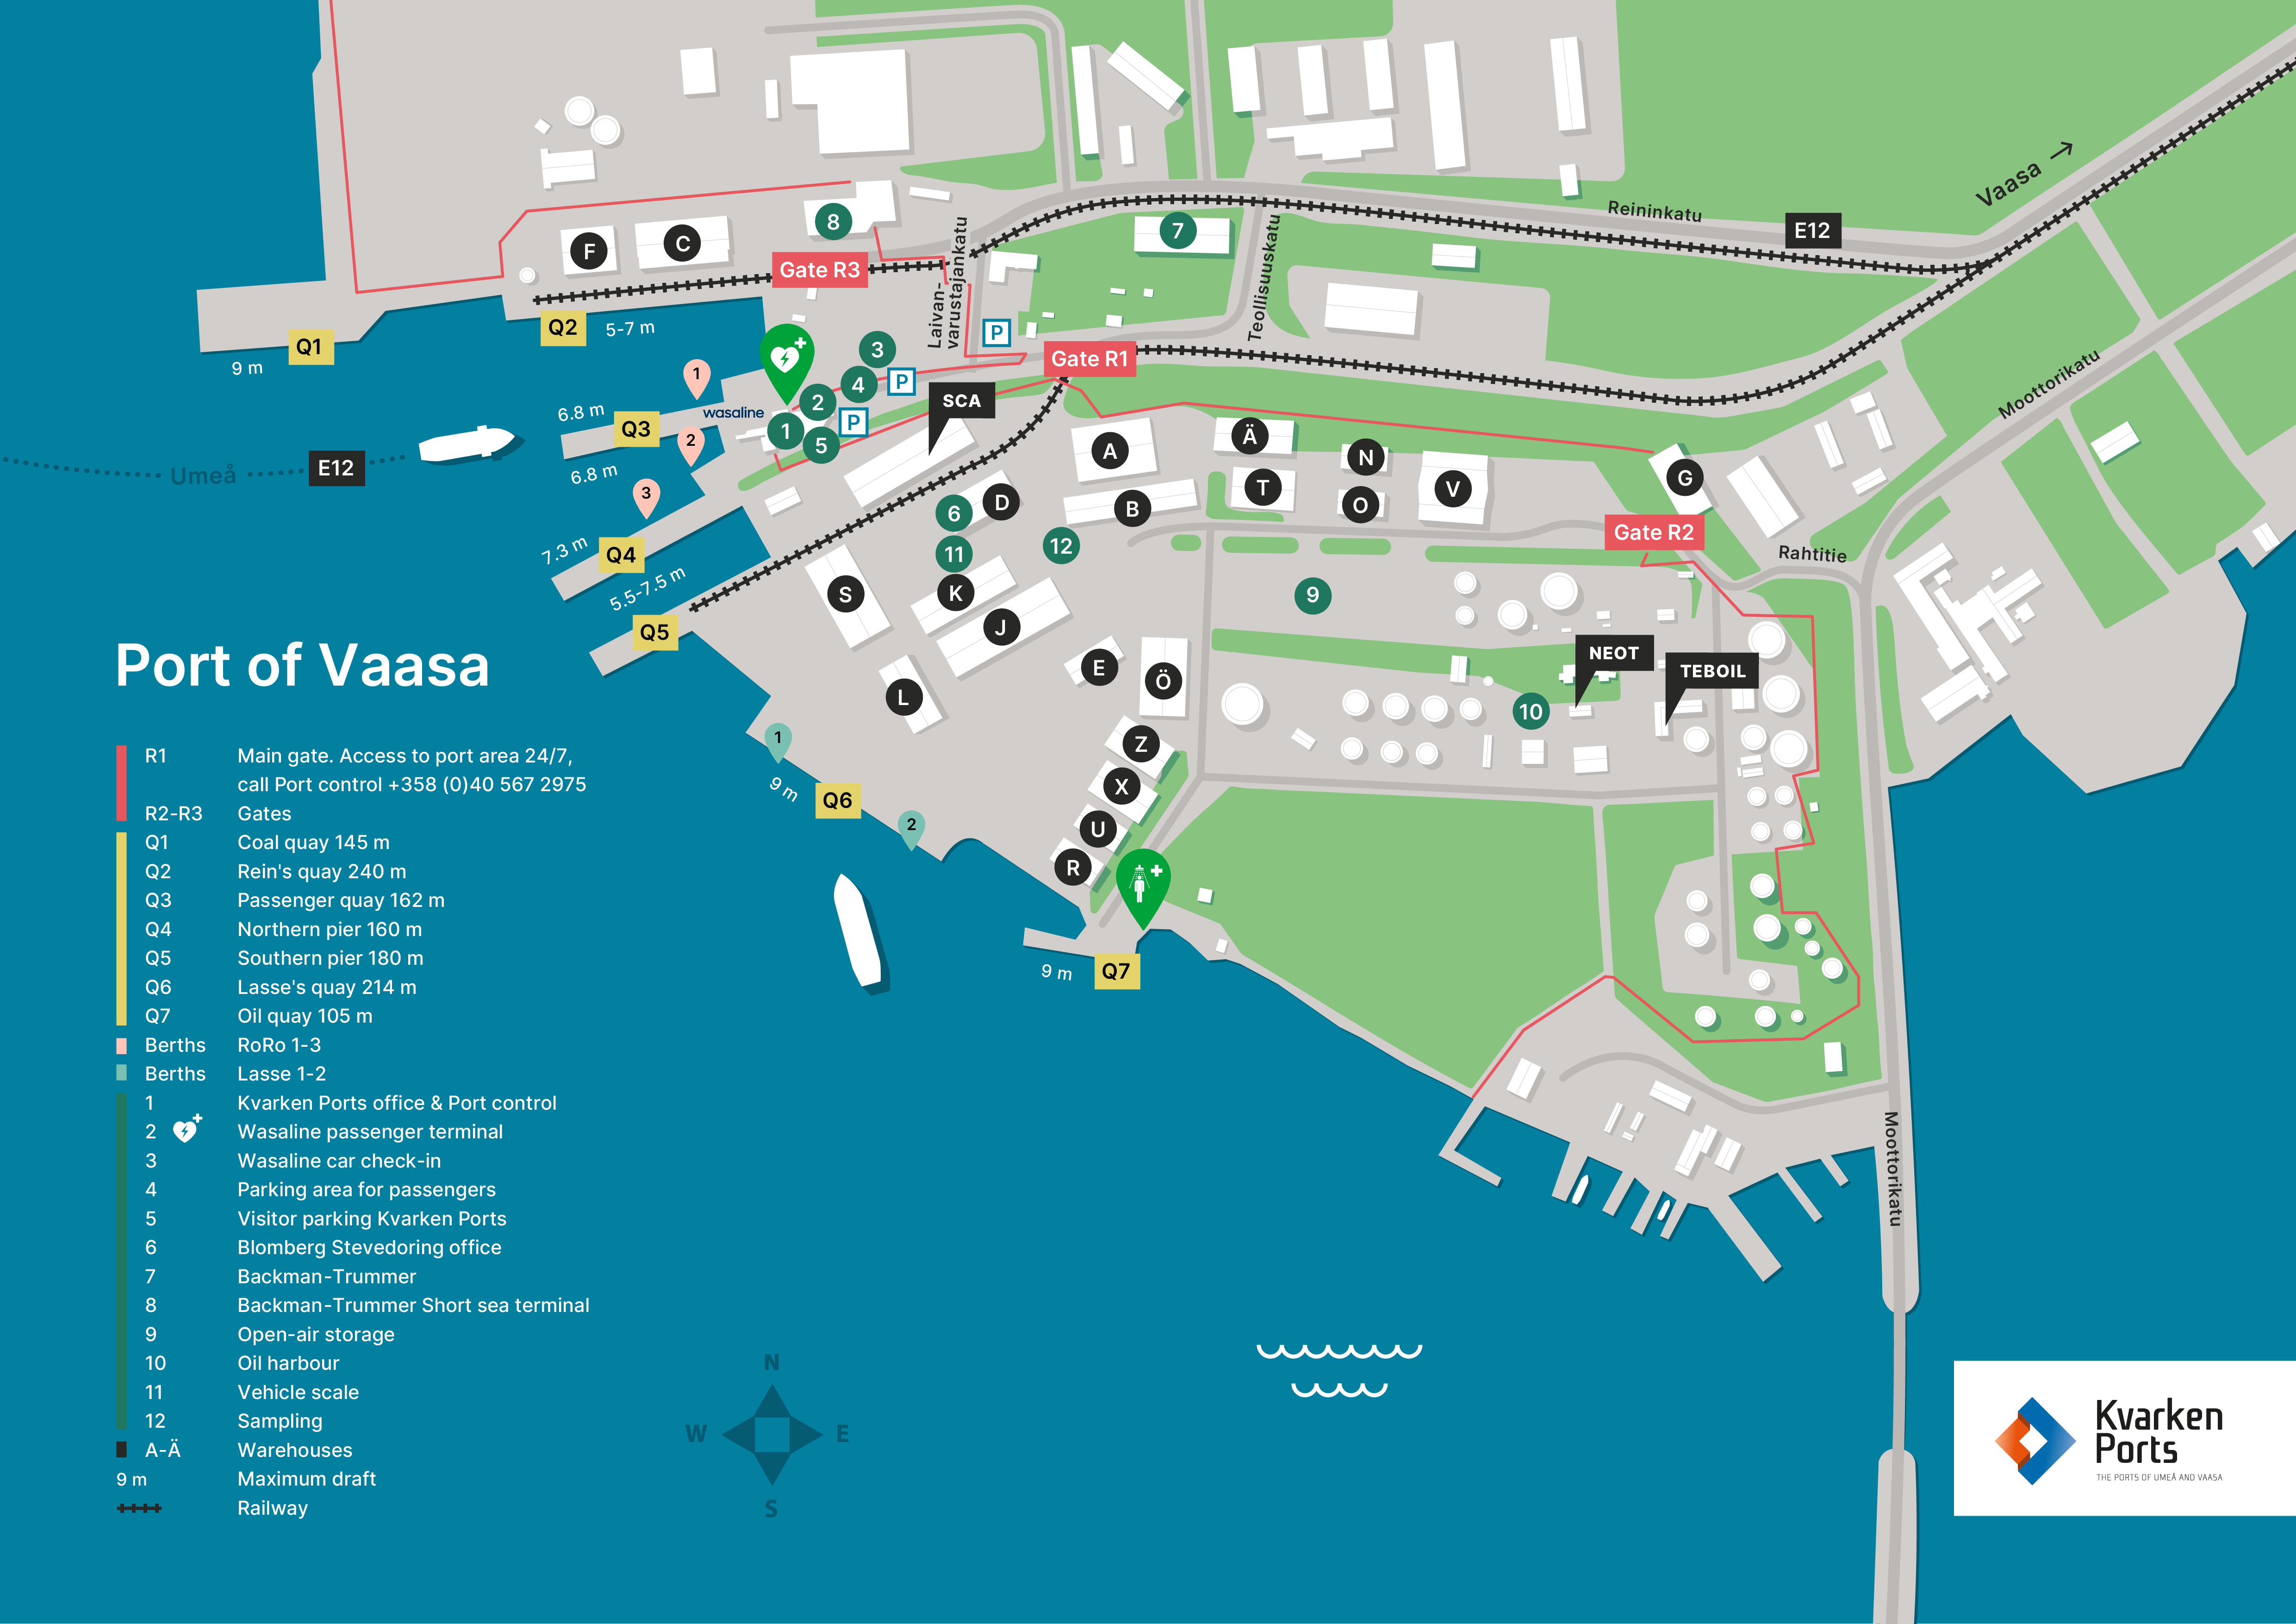 Kartbild över Vasa hamn